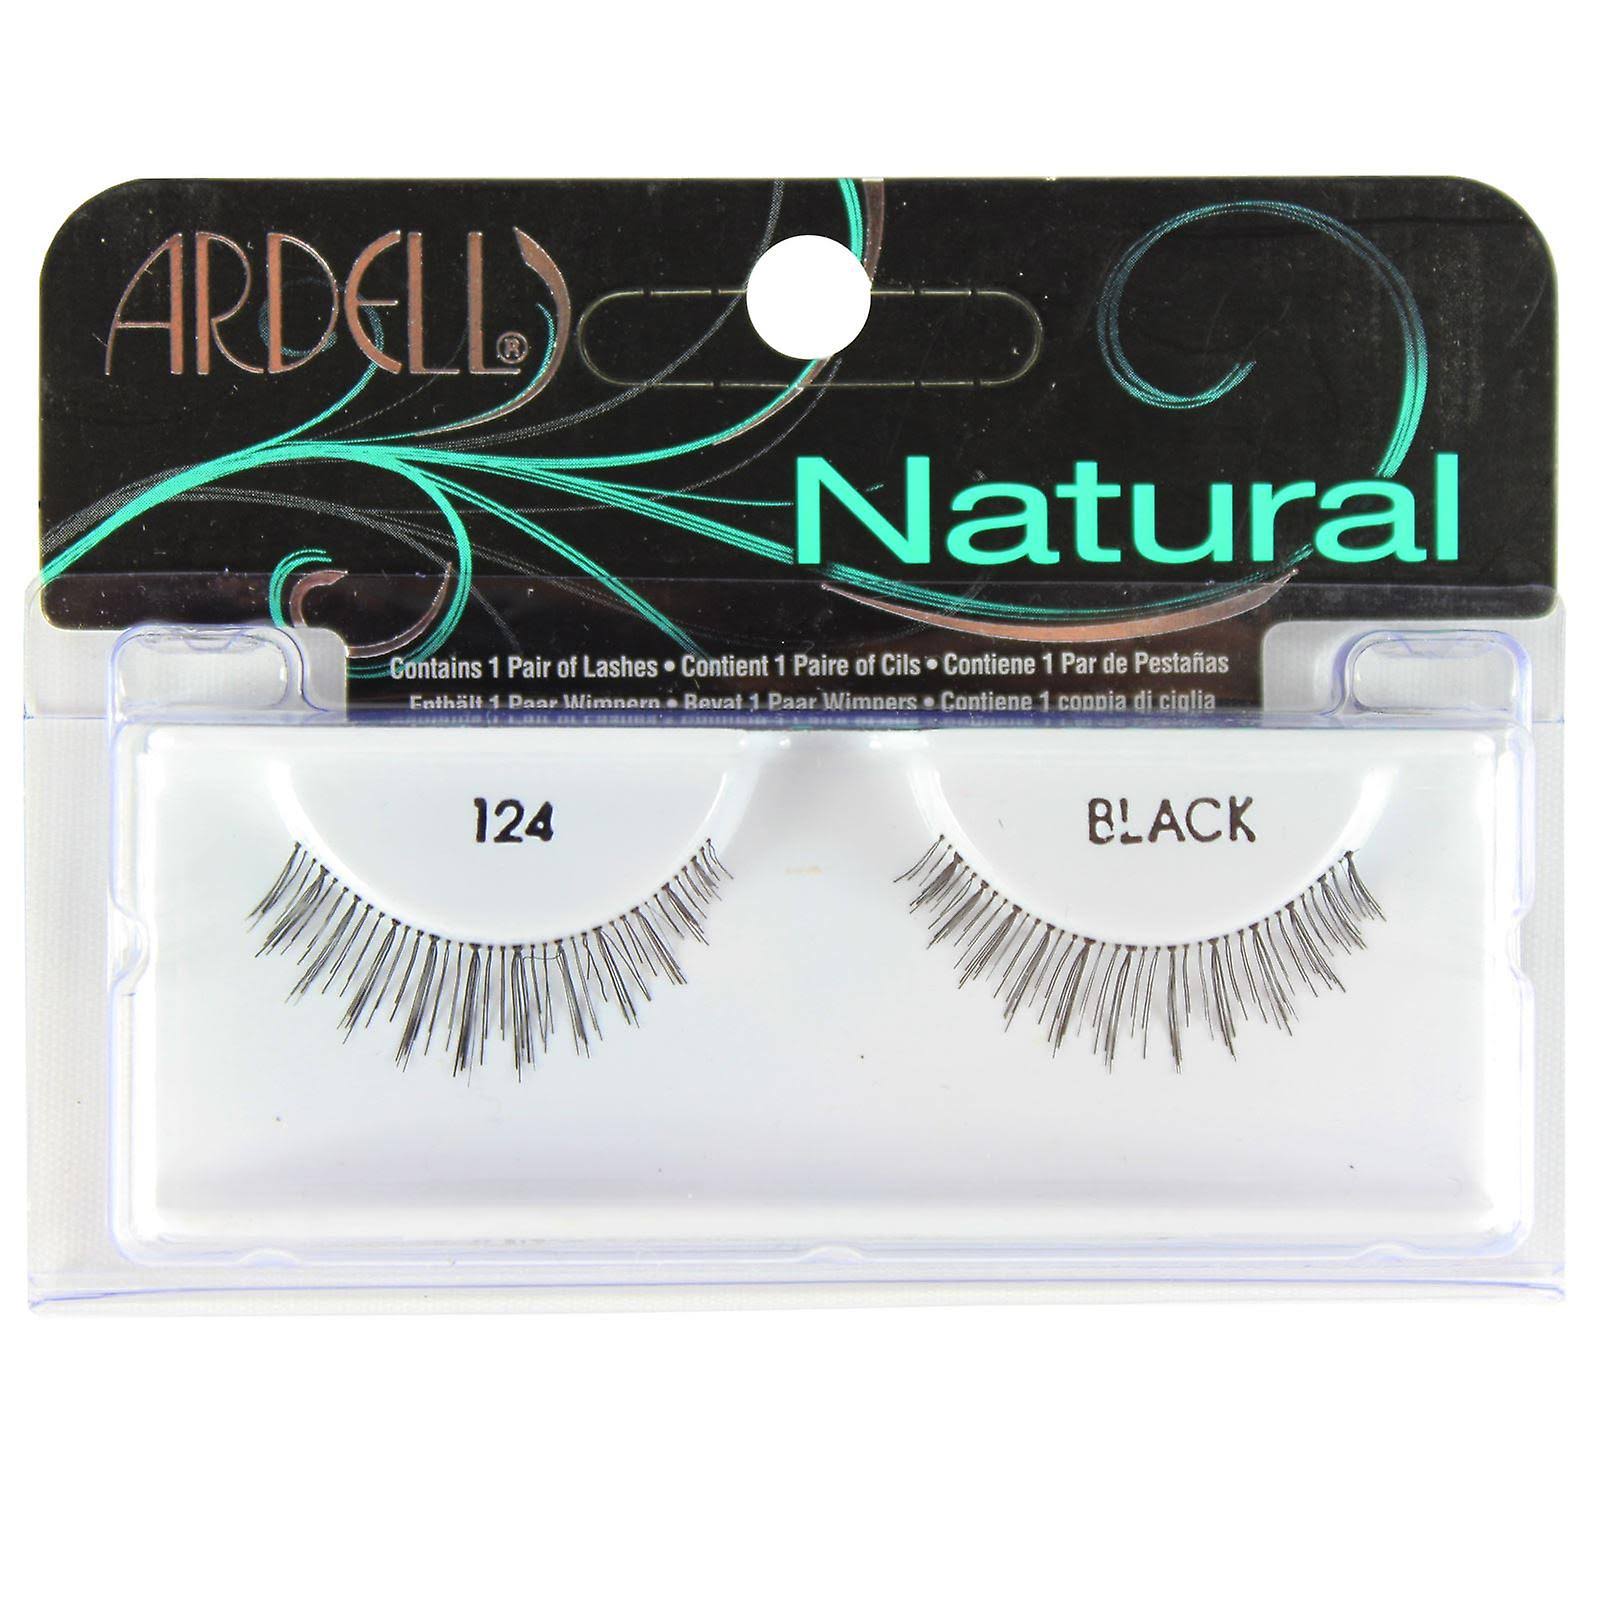 Ardell Natural False Eye Lashes - 124 Black, 2 Pack